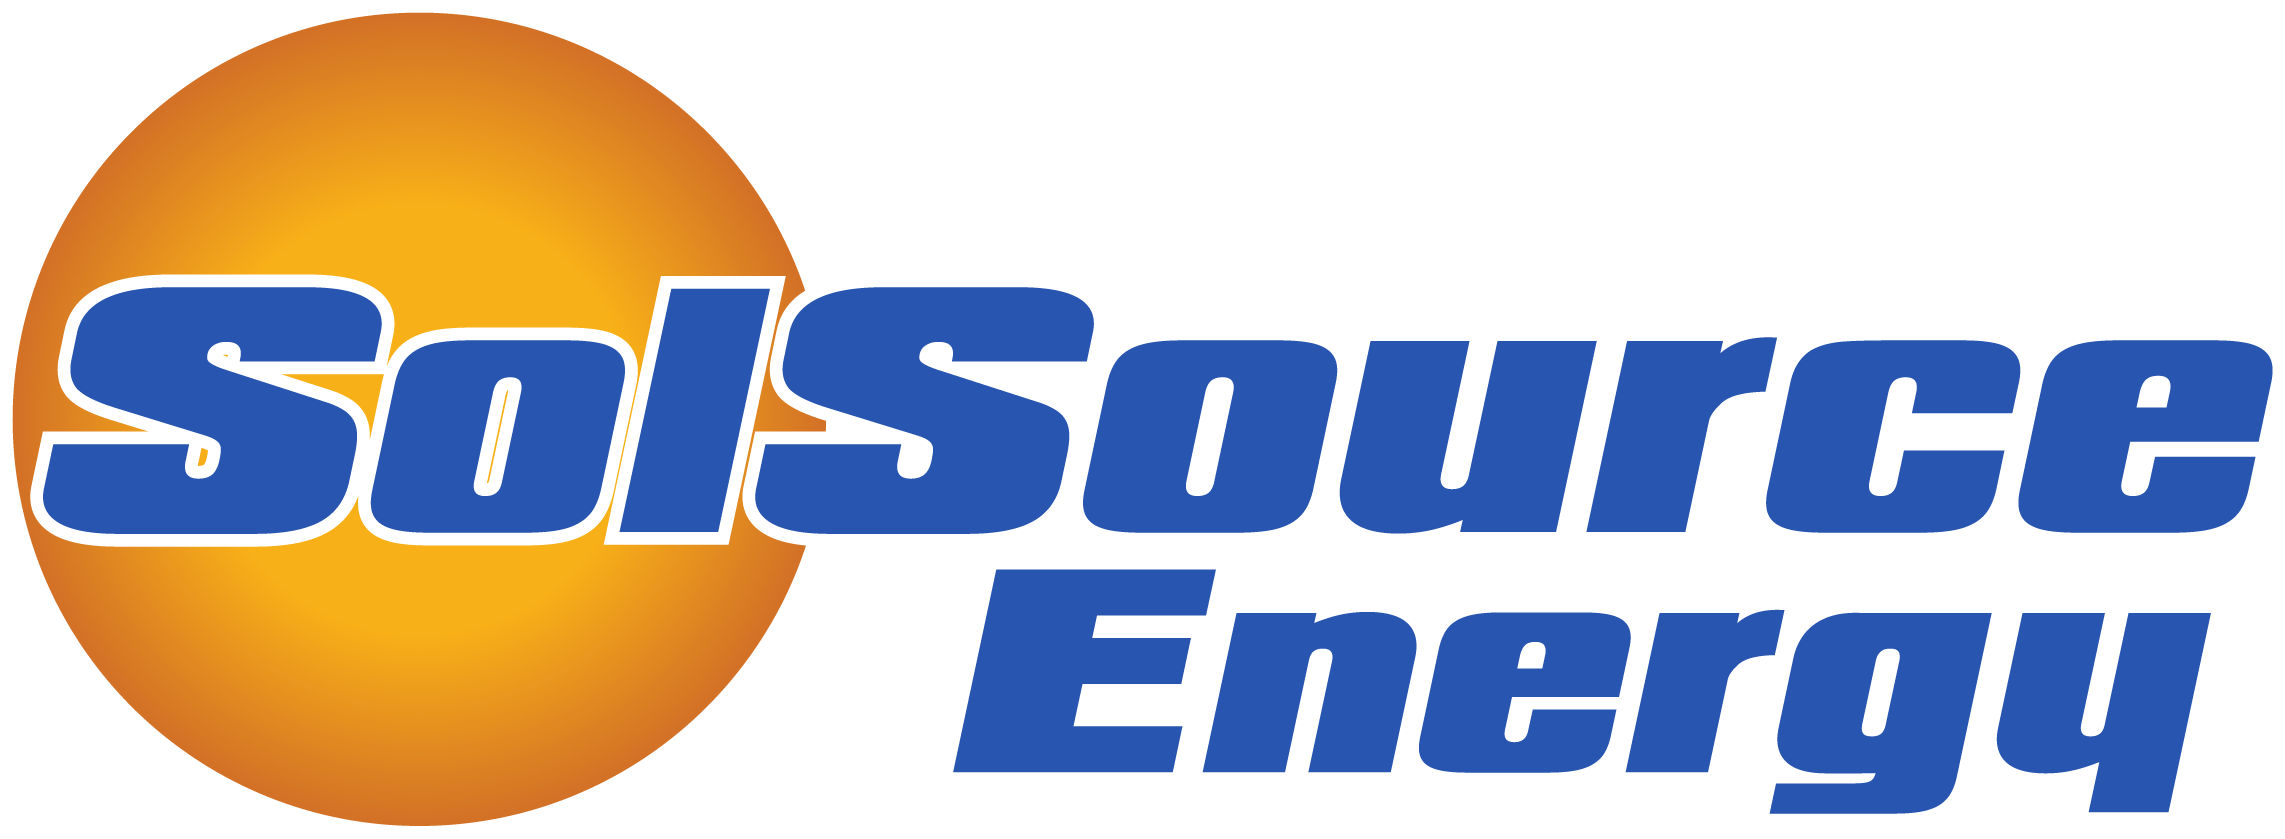 SolSource Energy